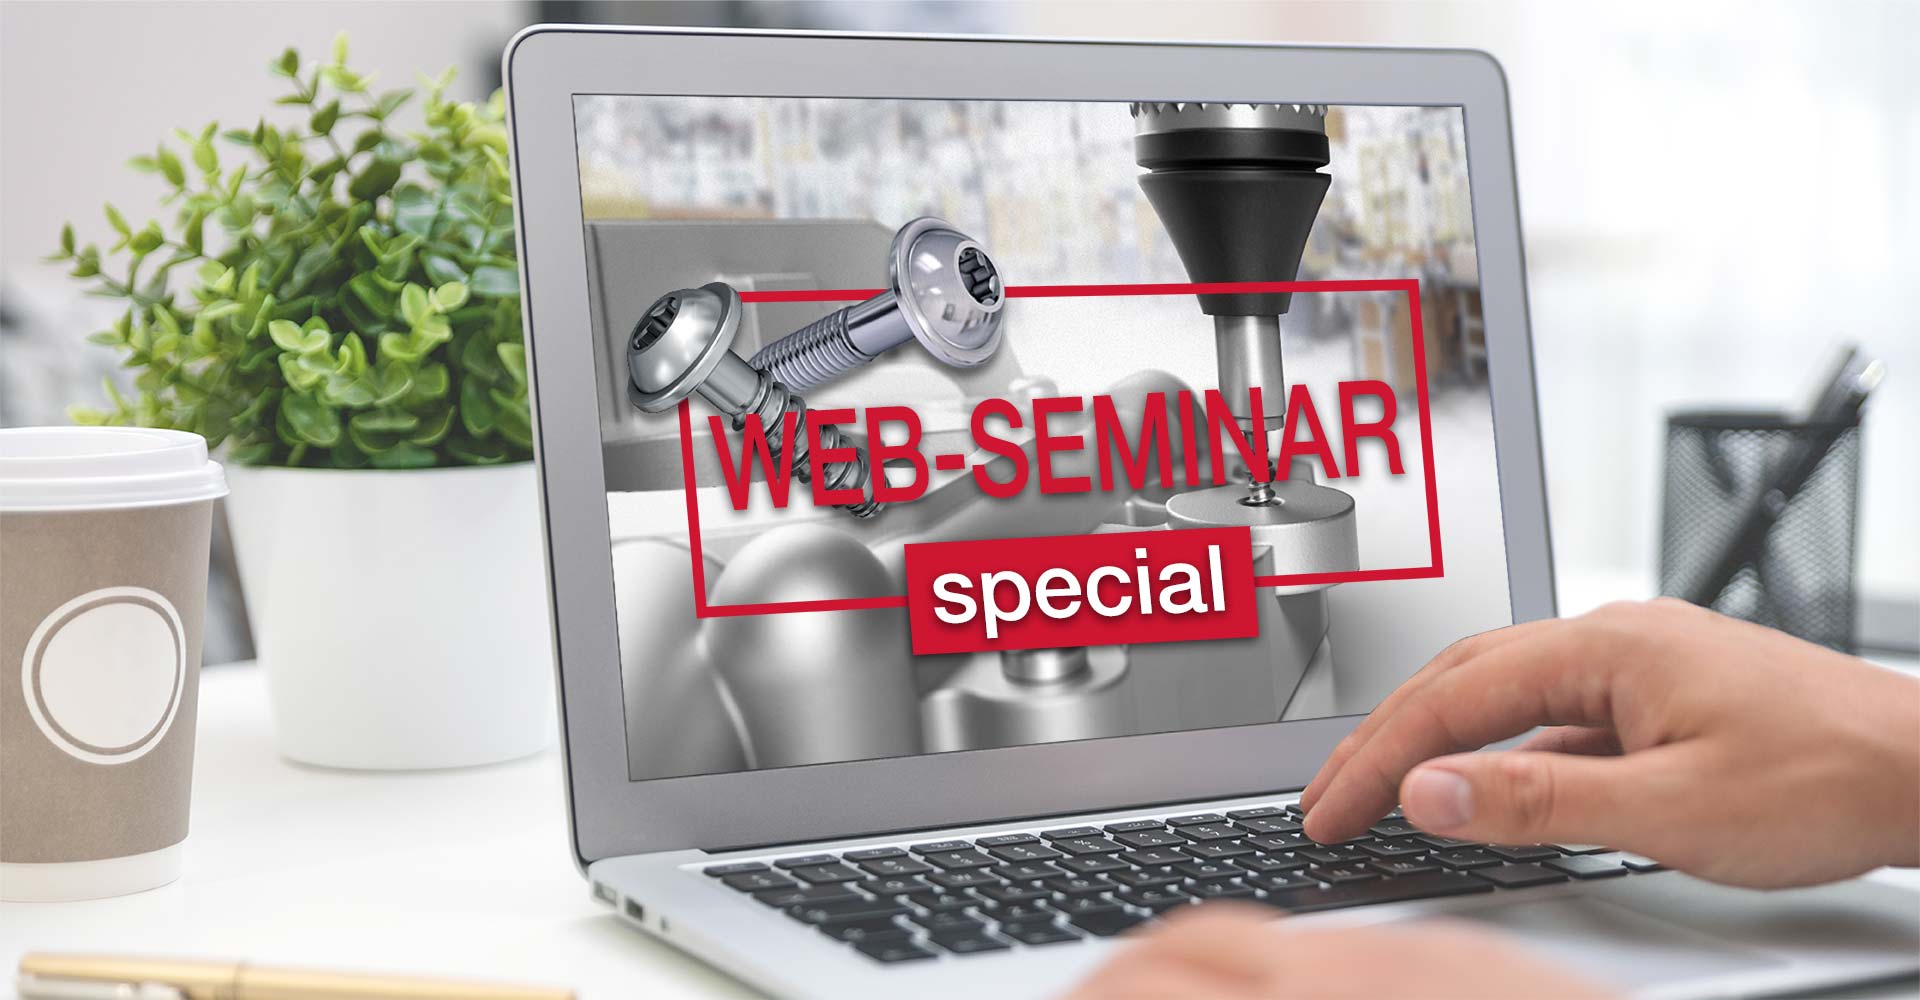 IND-Web-Seminar-special-EJOT.jpg